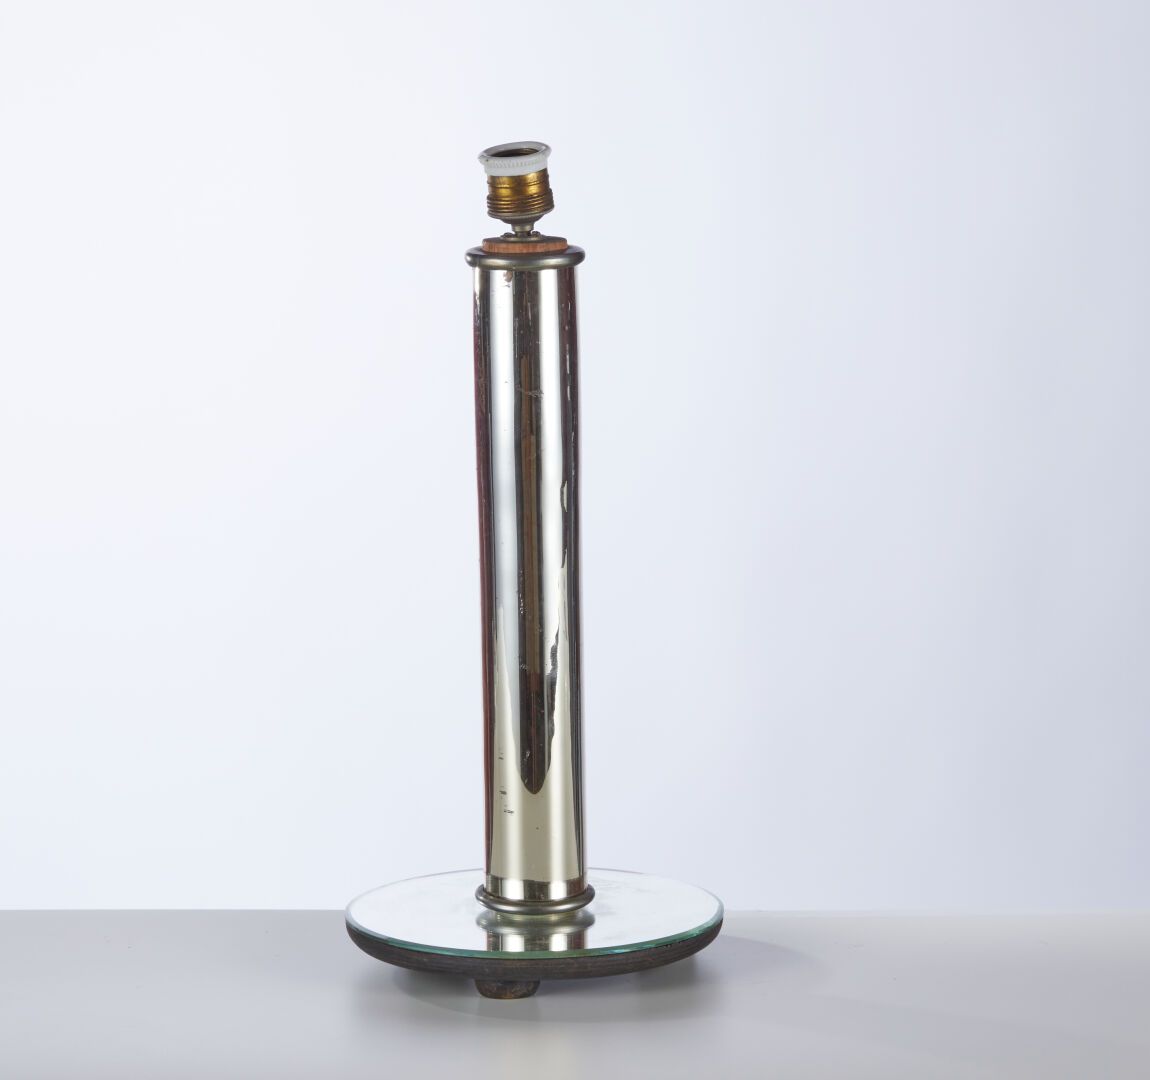 Null 20世纪的法国作品
镀铬金属和玻璃台灯
高：41厘米